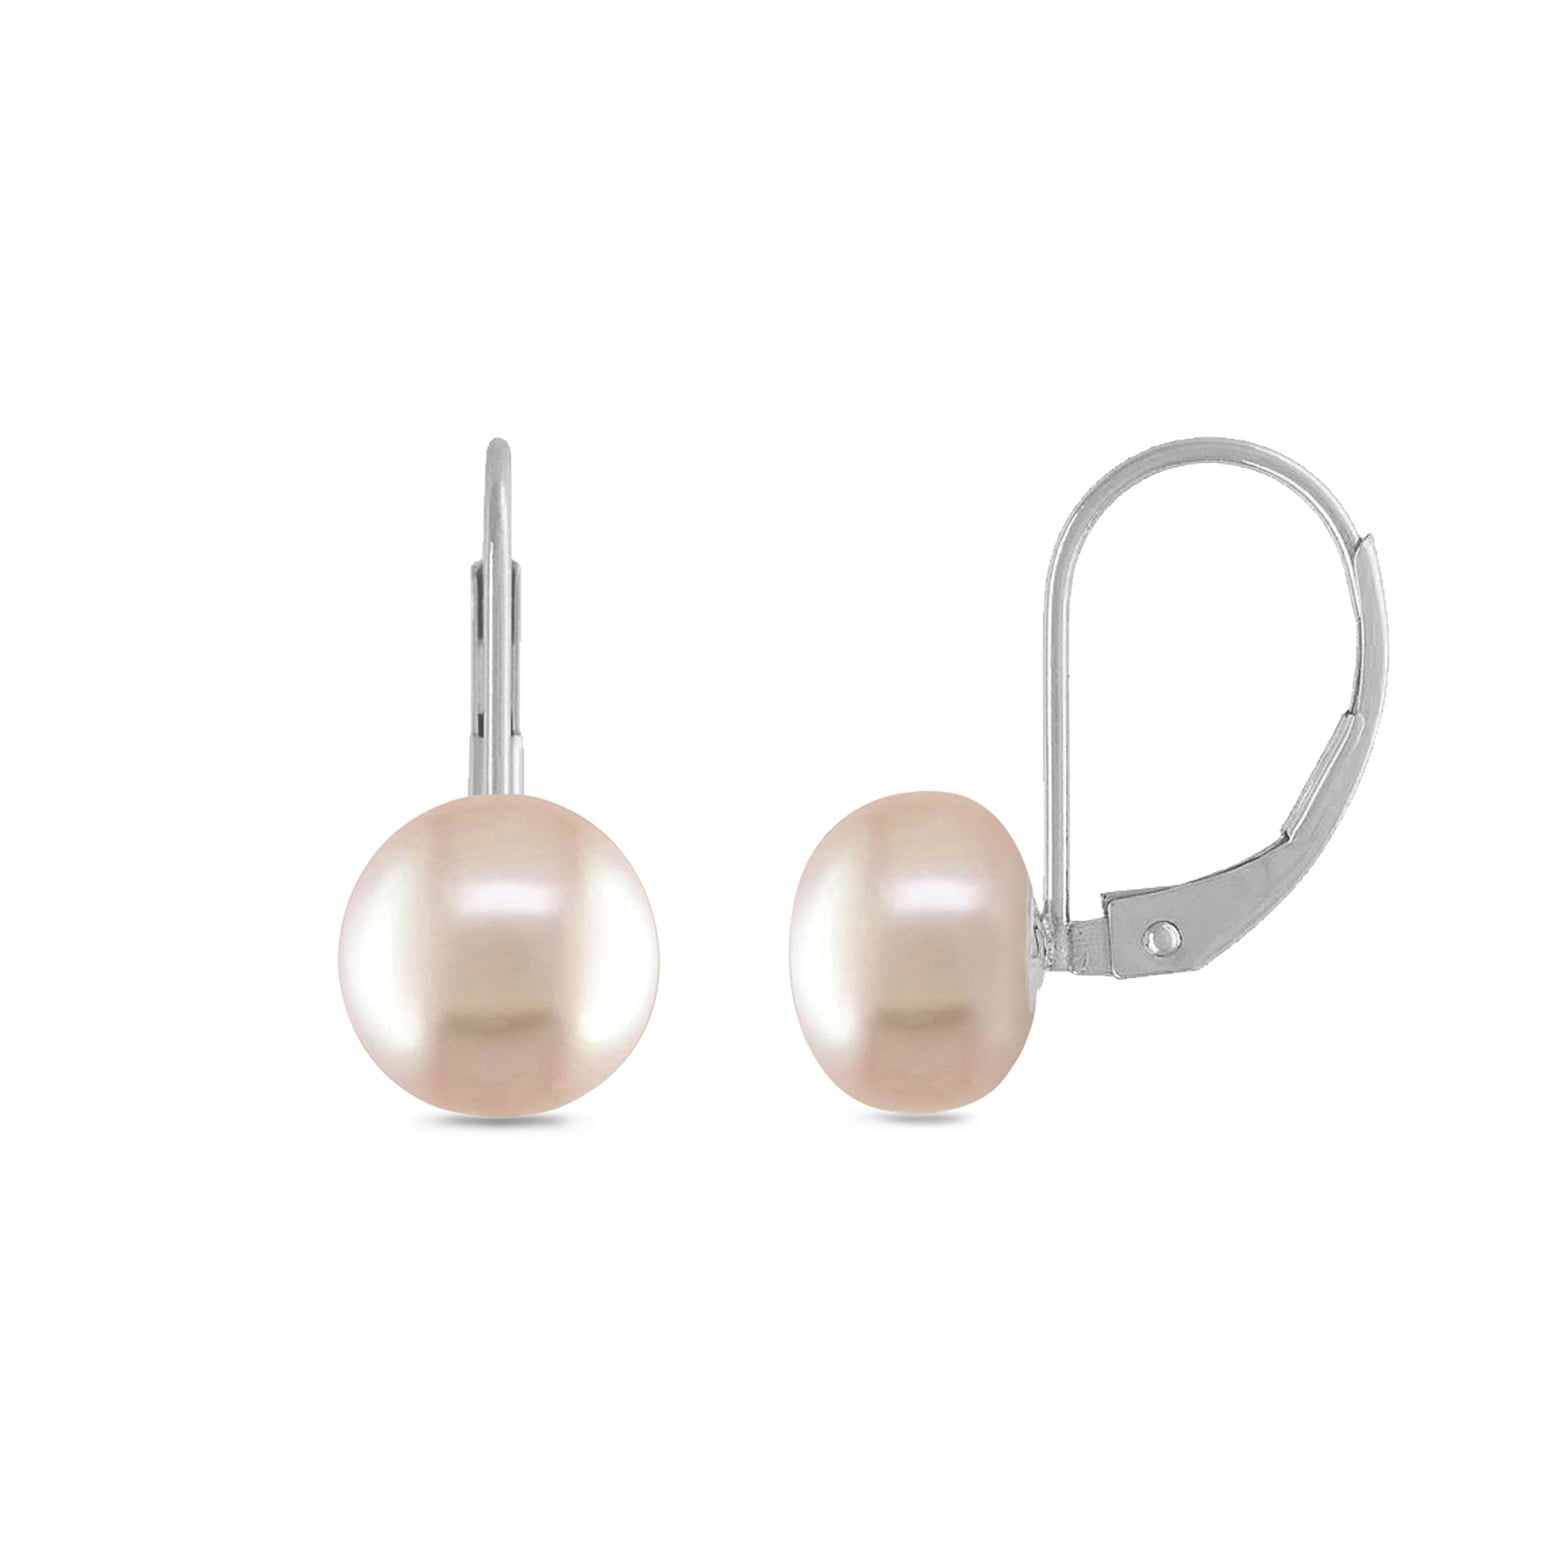 8mm Round Genuine Freshwater White Pearls Leverback Click in Earrings Set in Rhodium Plated 925 Sterling Silver Earrings Pearl Earrings